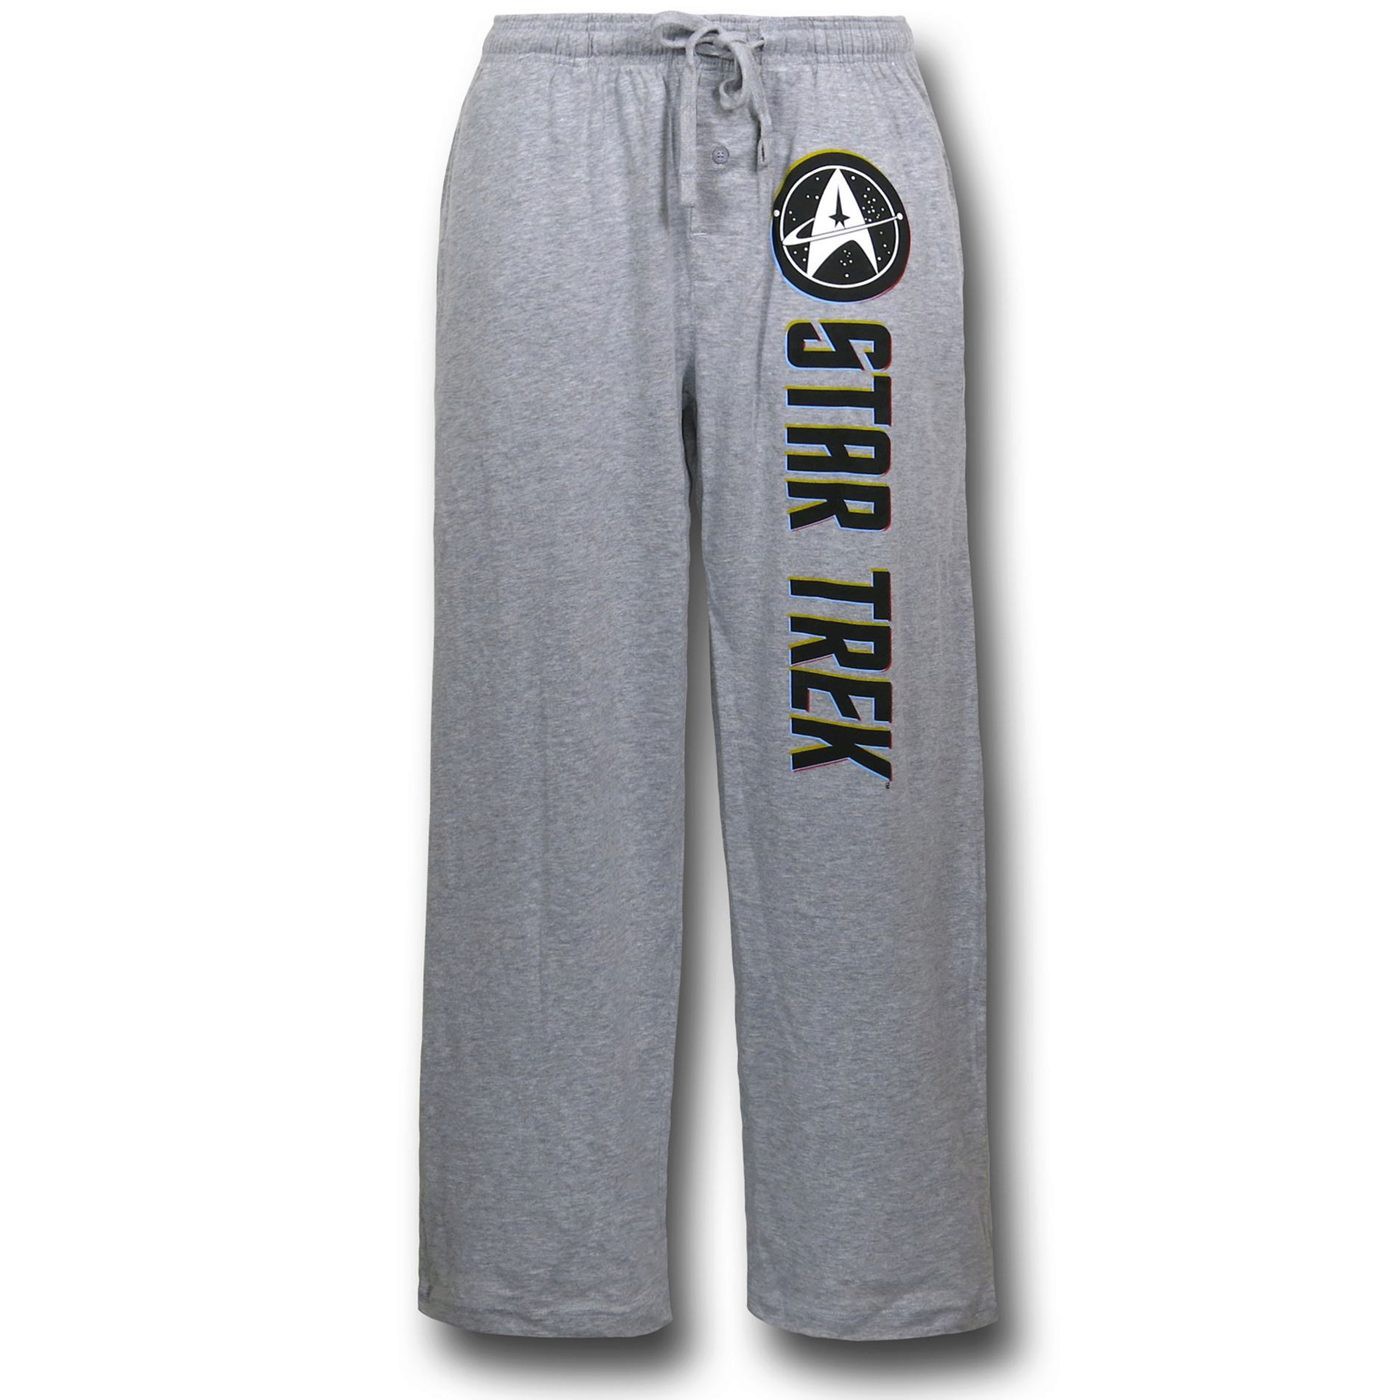 Star Trek Grey Sleep Pants